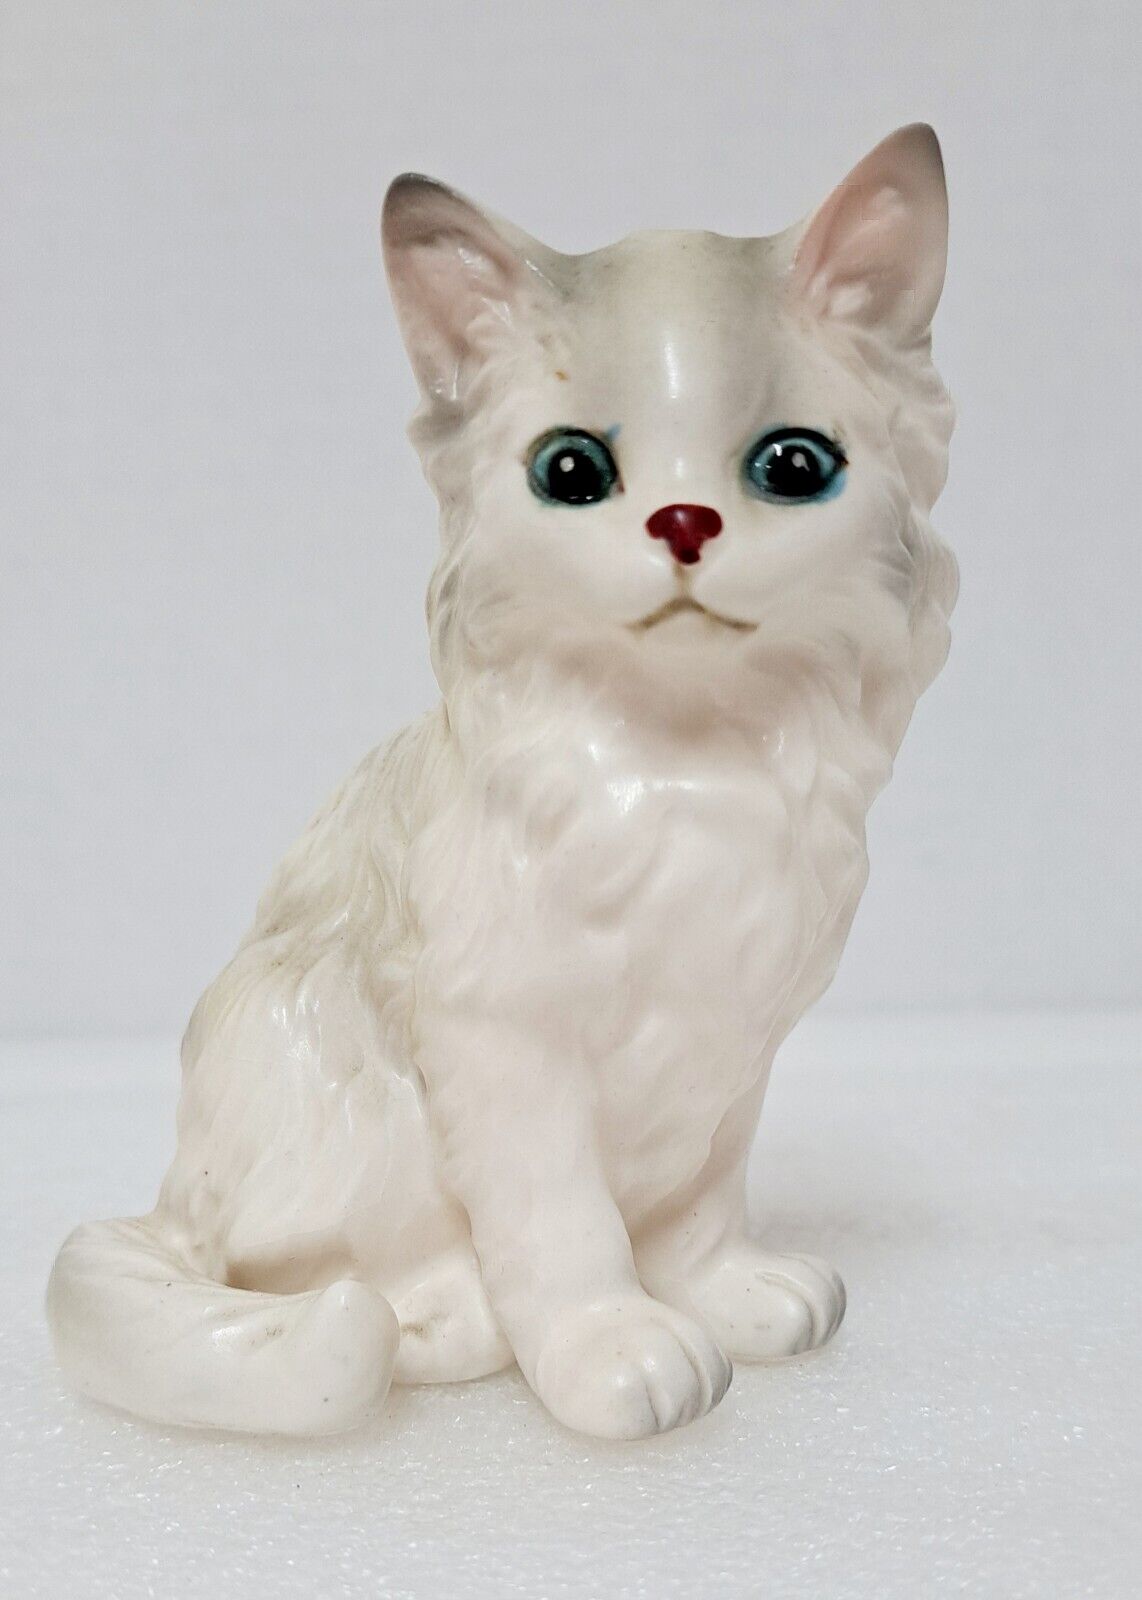 Vintage Lefton Porcelain White Persian Kitten Cat Figurine Made in Japan #1513